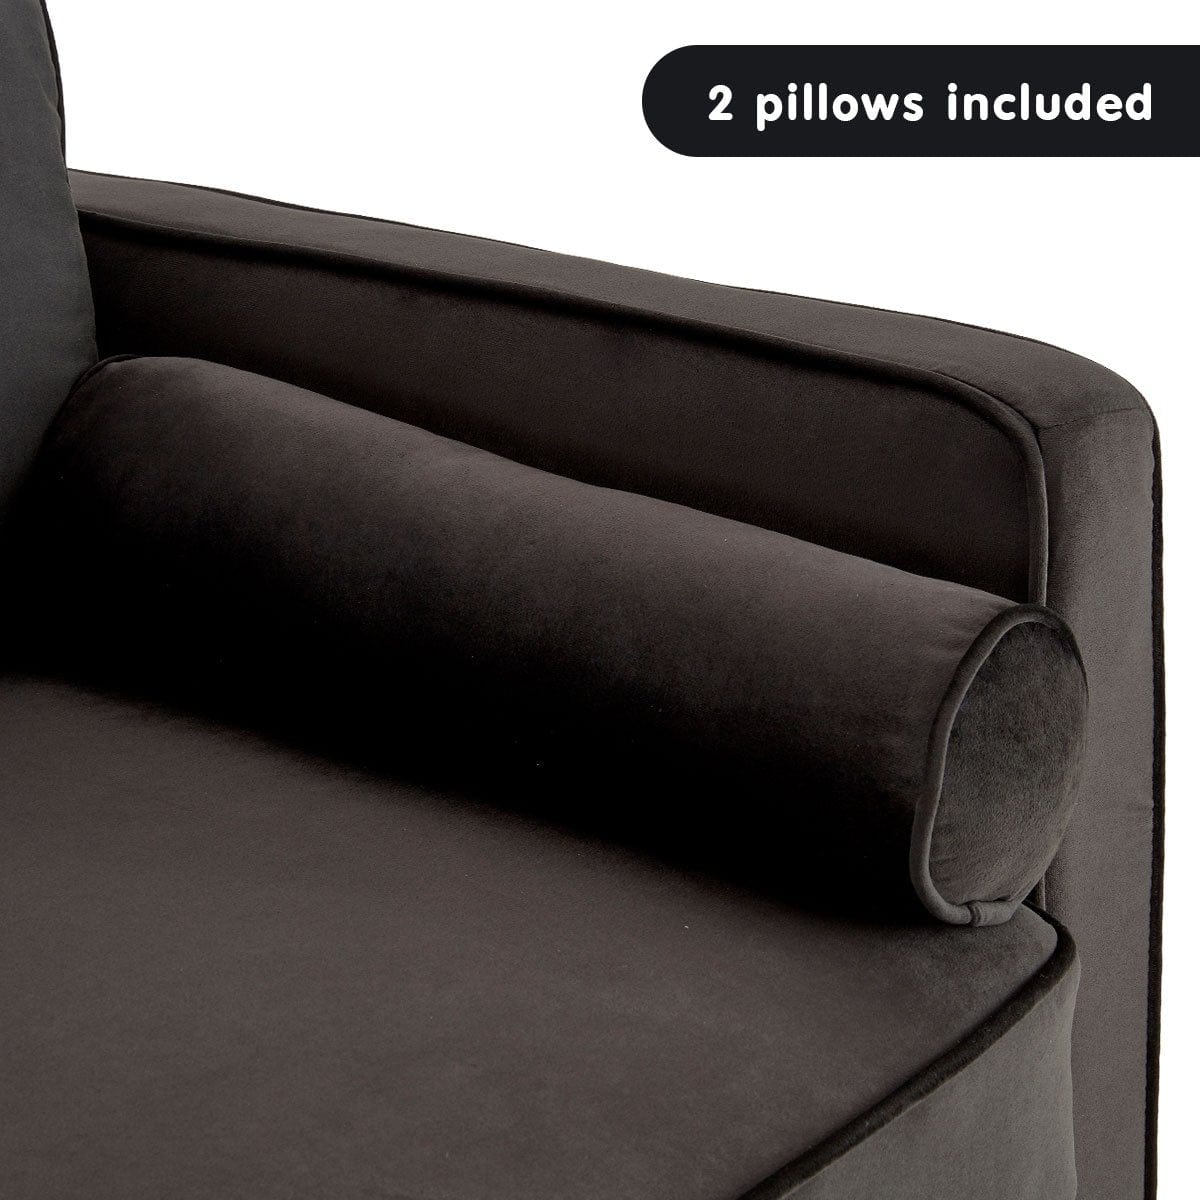 Velvet Sofa Bed Couch Furniture Lounge Suite - Black